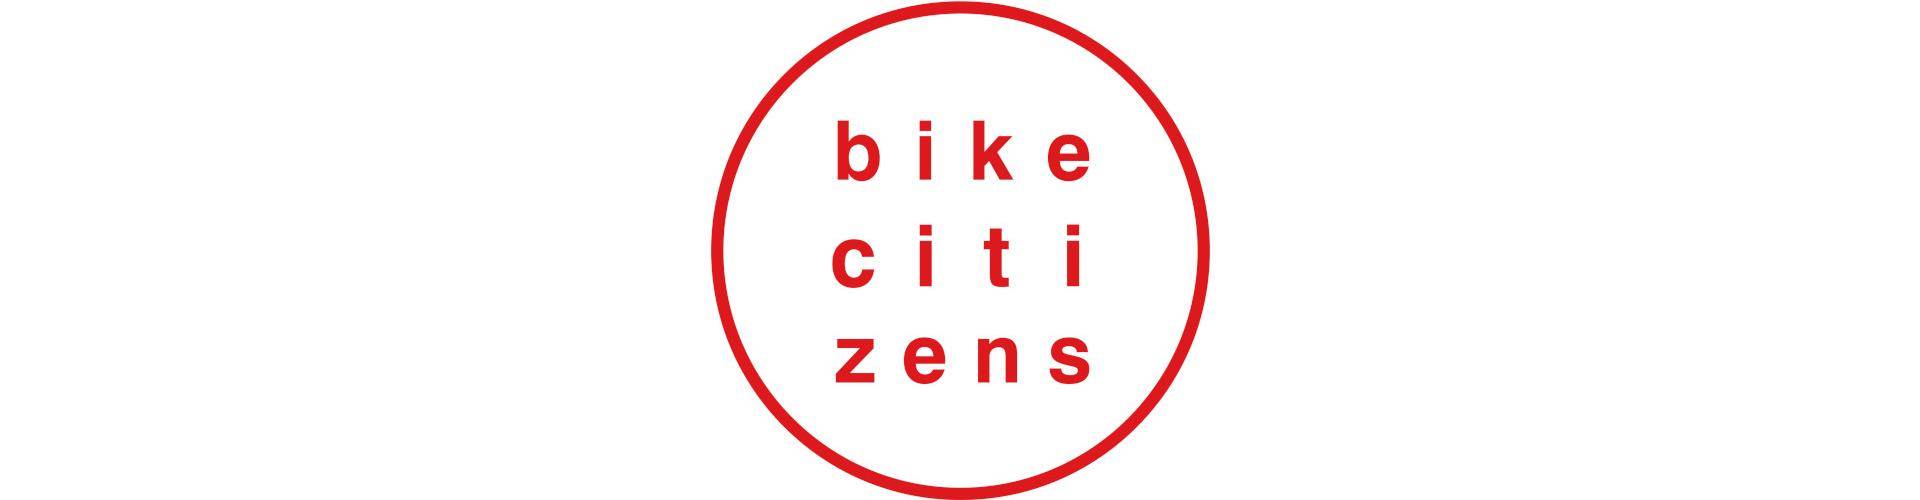 Bike Citizens Germany GmbH